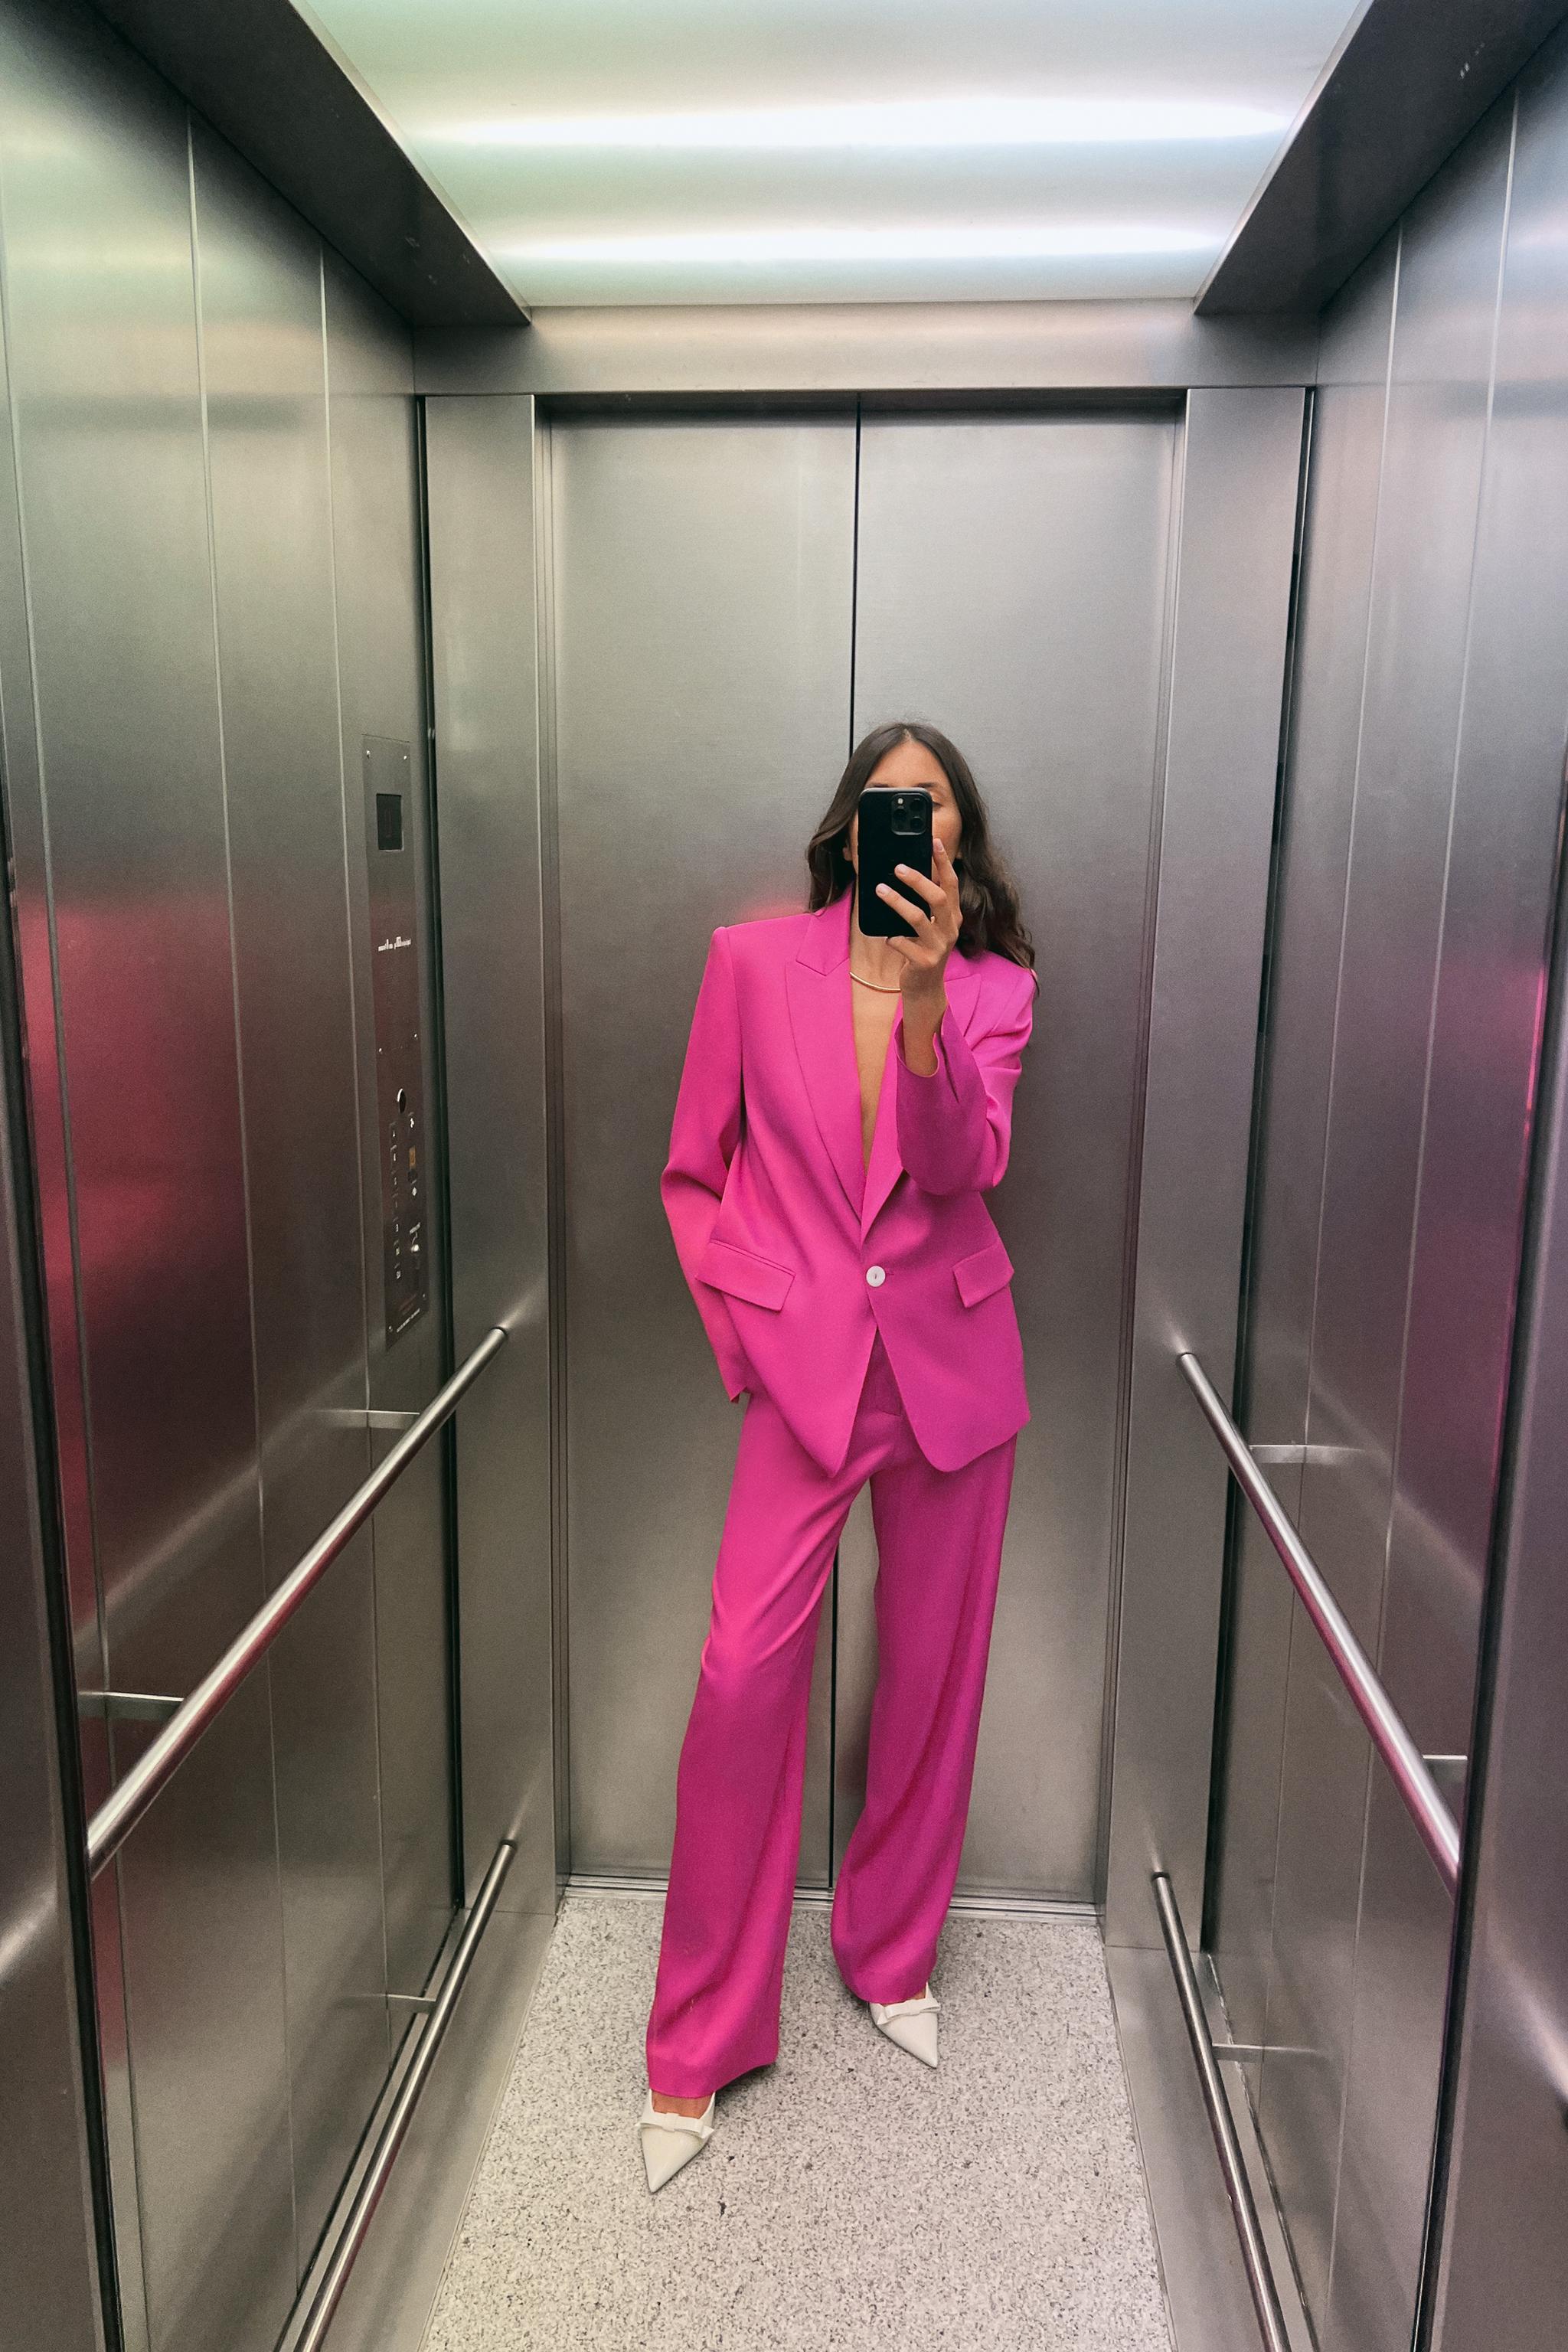 Zara Pink Bootcut Pants Womens XS Pull On Drawstring